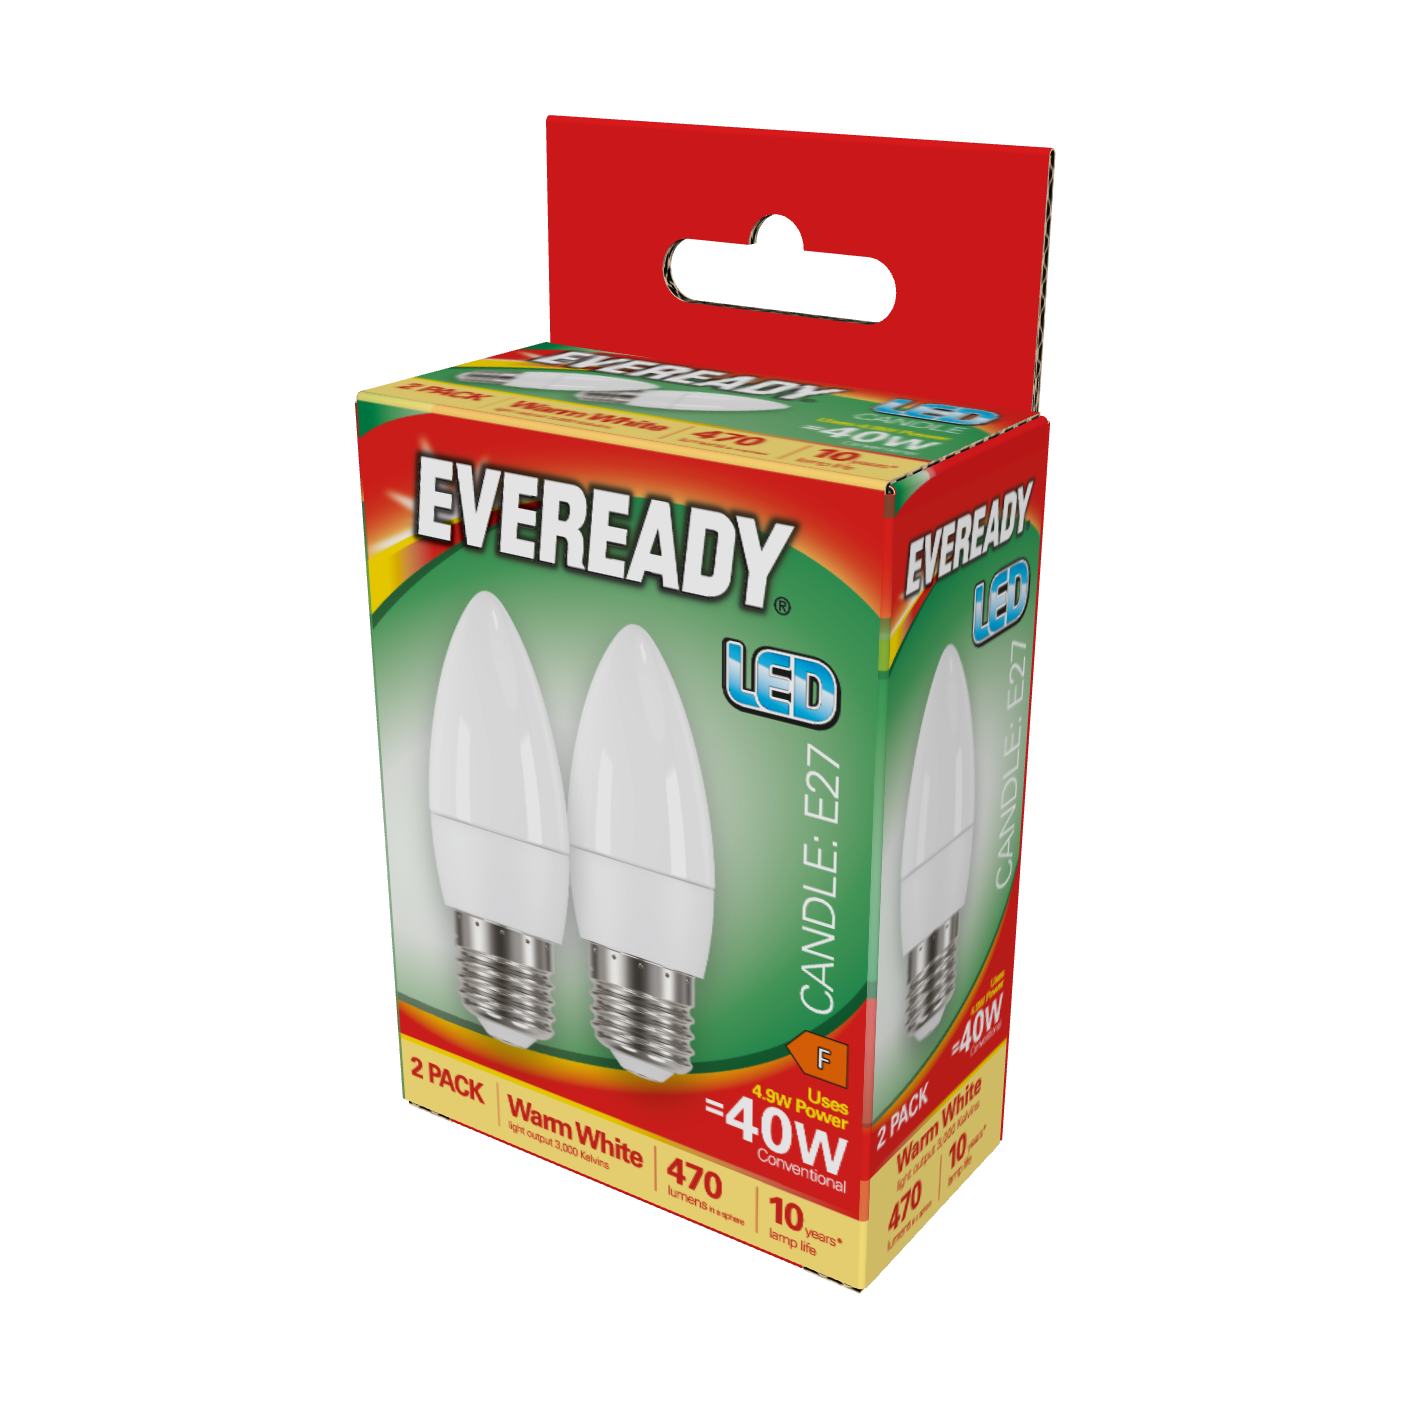 Eveready LED Candle E27 (ES) 470lm 4.9W 3,000K (Warm White), Box of 2